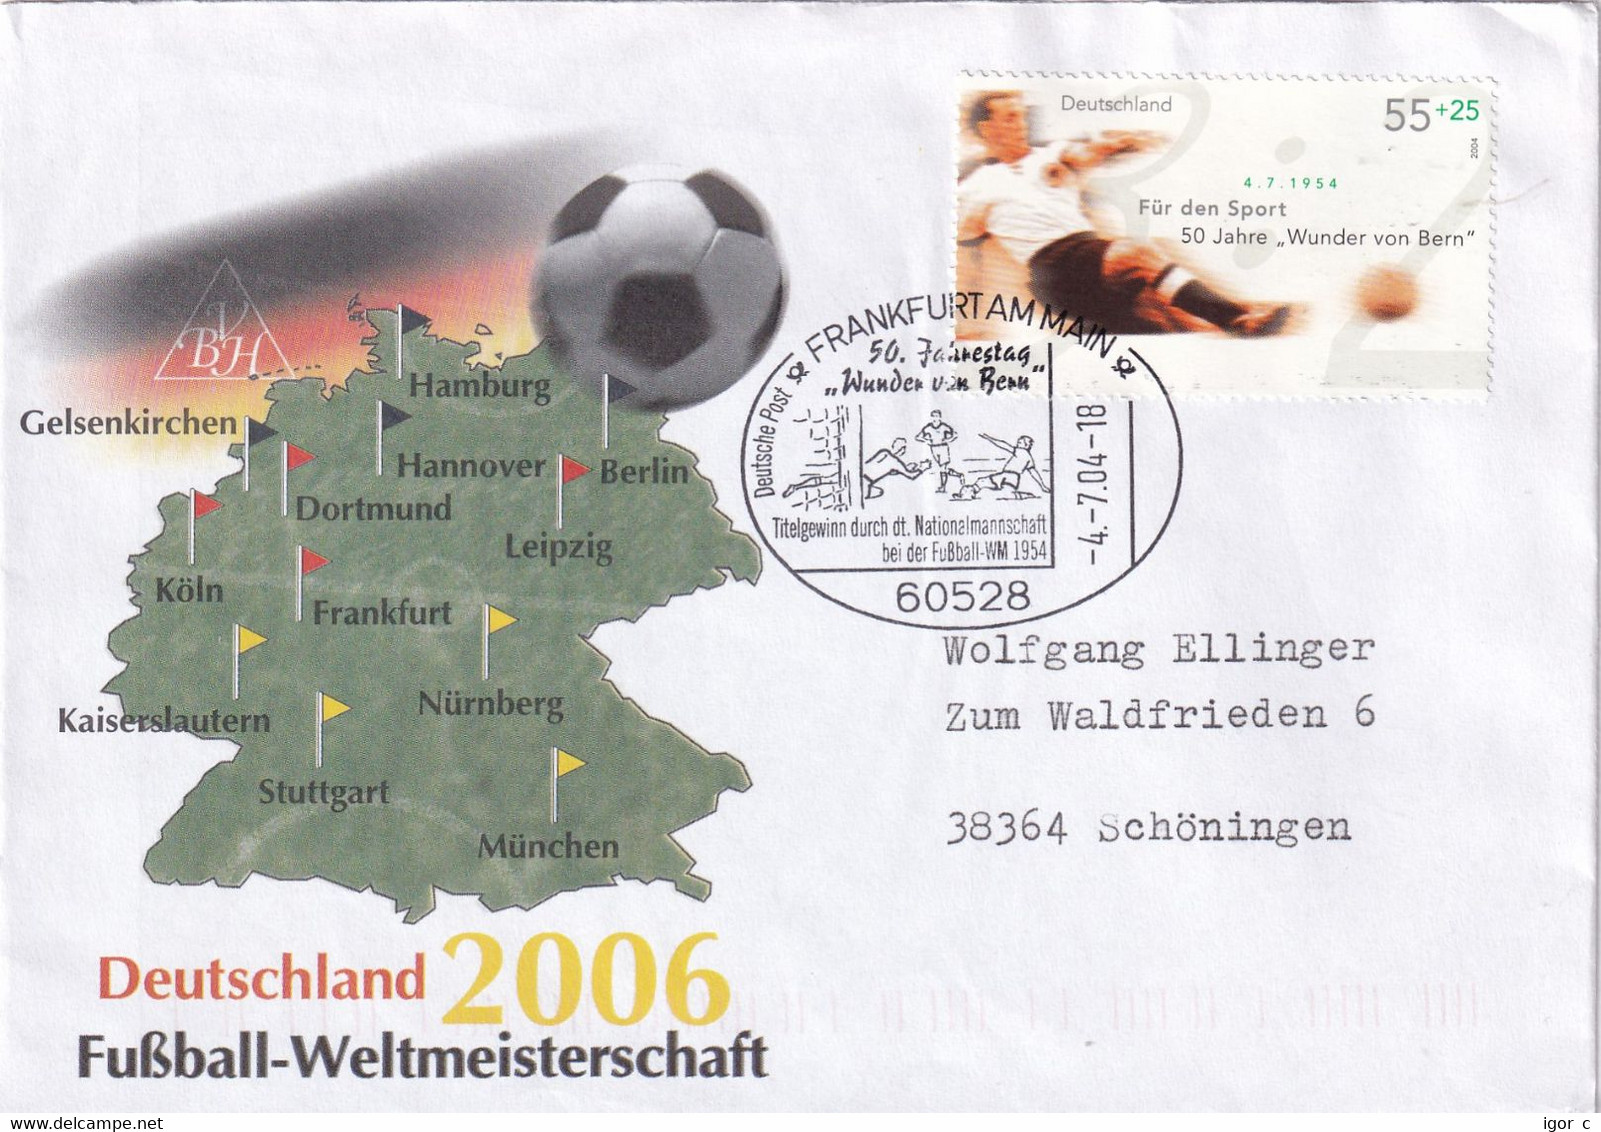 Germany 2004 Cover; Football Fussball Soccer Calcio: FIFA World Cup 1954: 50 Jahre Wunder Von Bern; 2006 Host Cities - 1954 – Schweiz